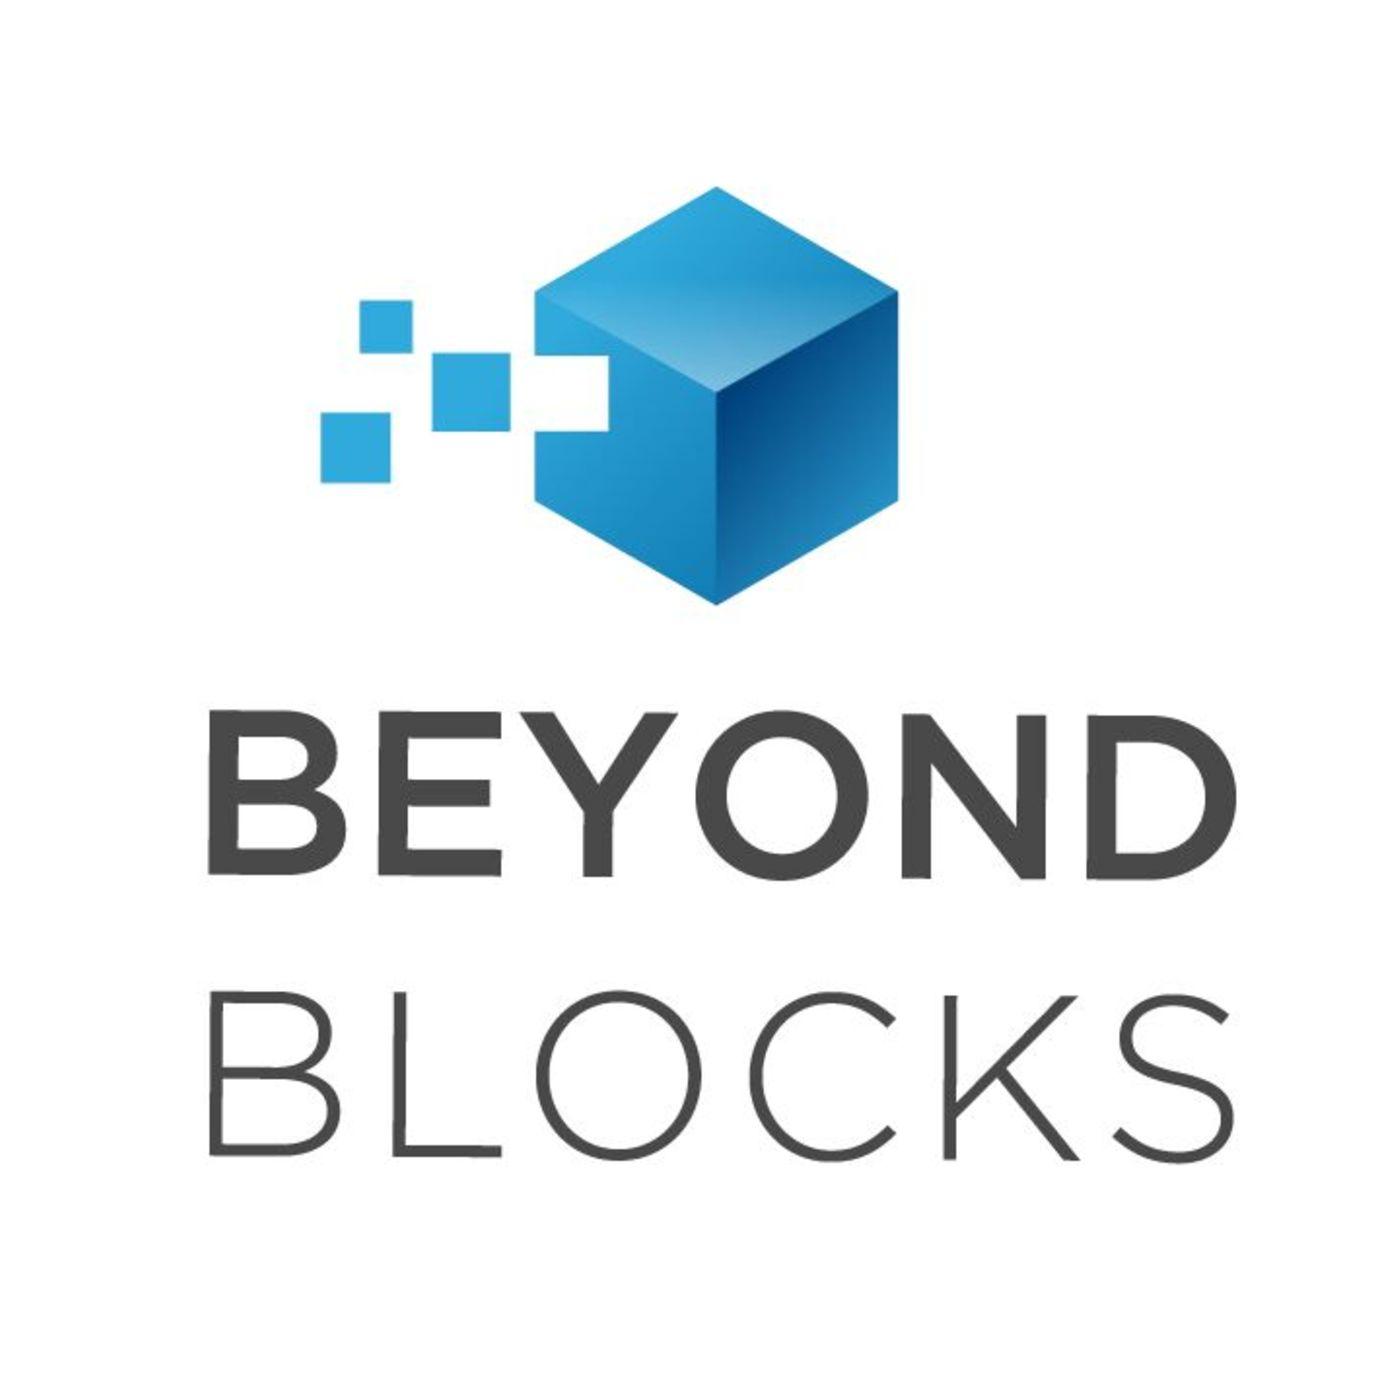 Blue Block S Logo - Beyond Blocks Blockchain Enthusiasts